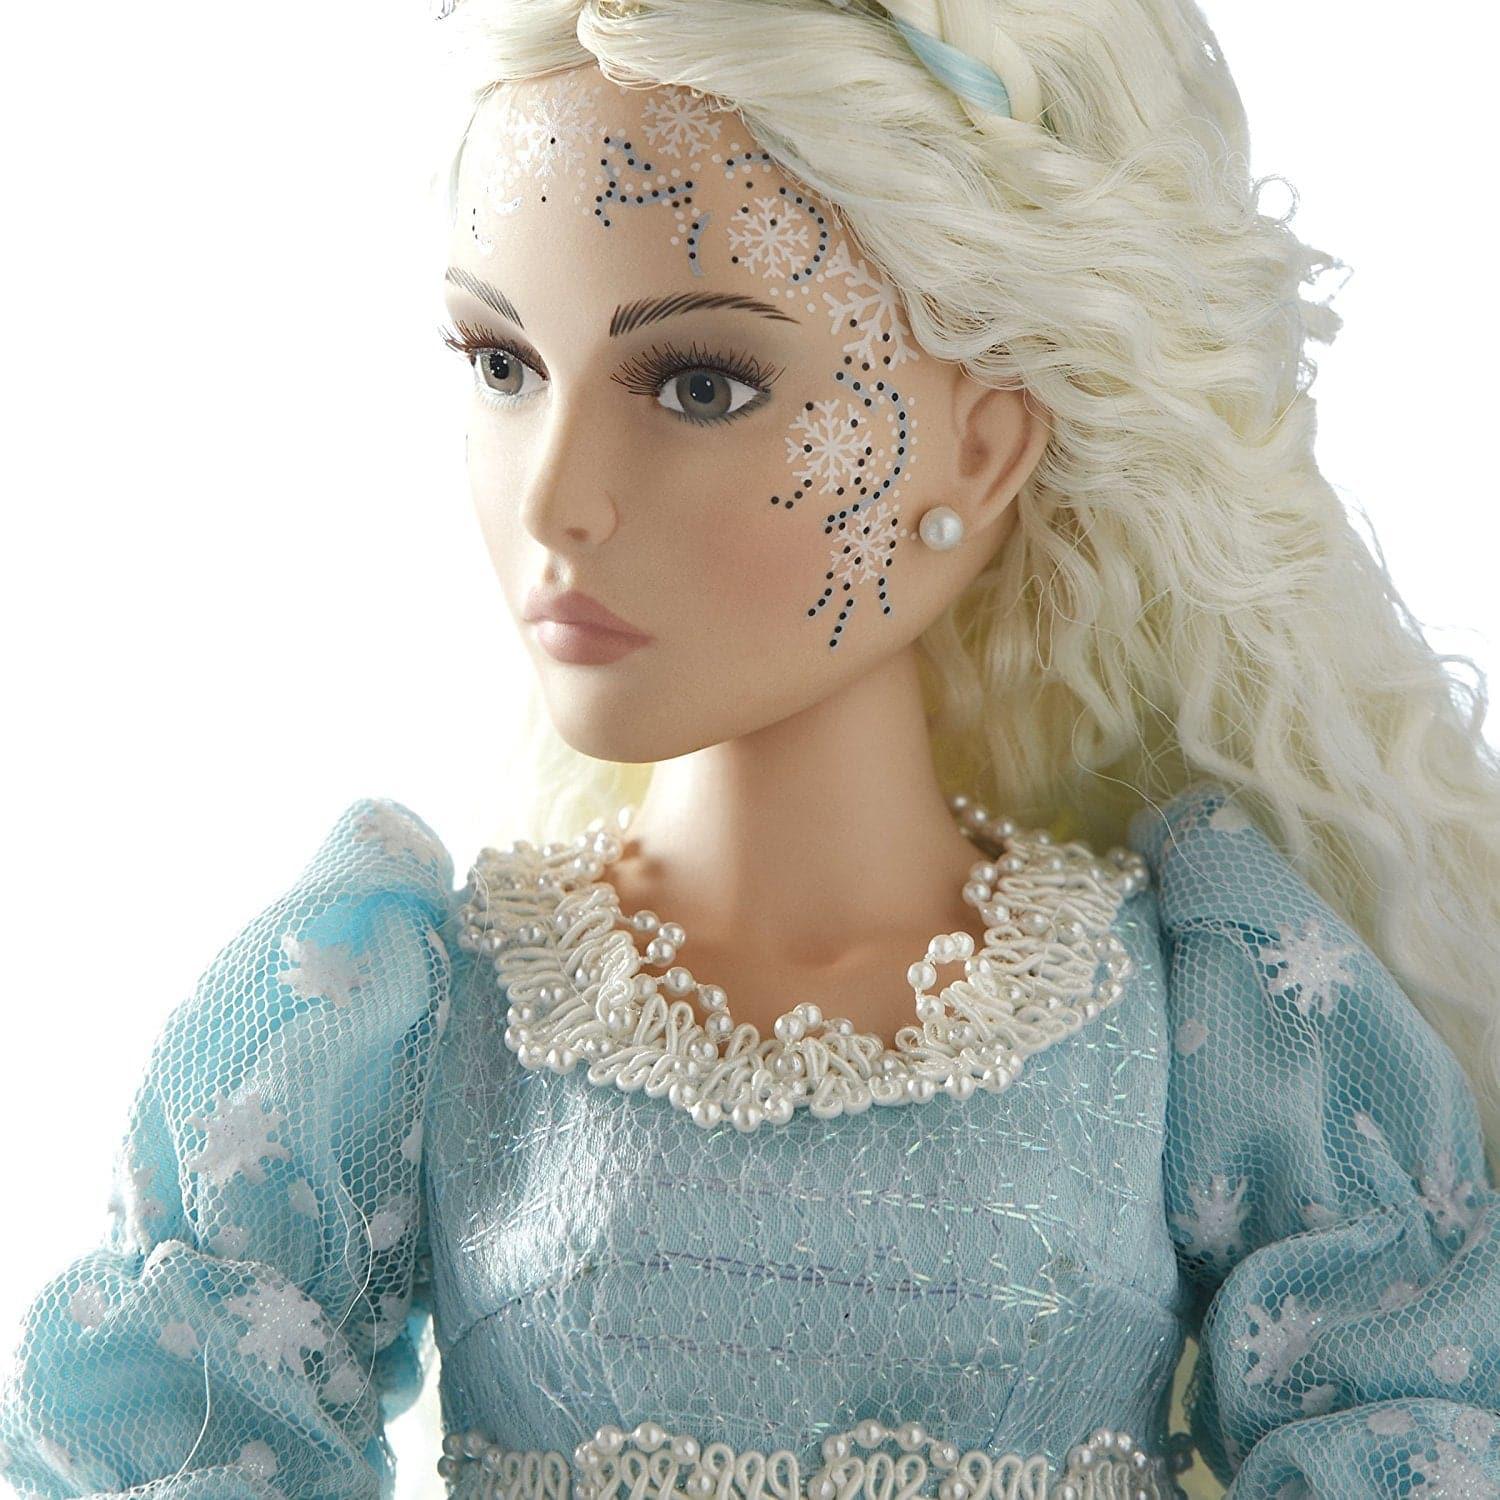 Paradise Galleries Porlelain Doll - Ice Princess - Frozen Elsa